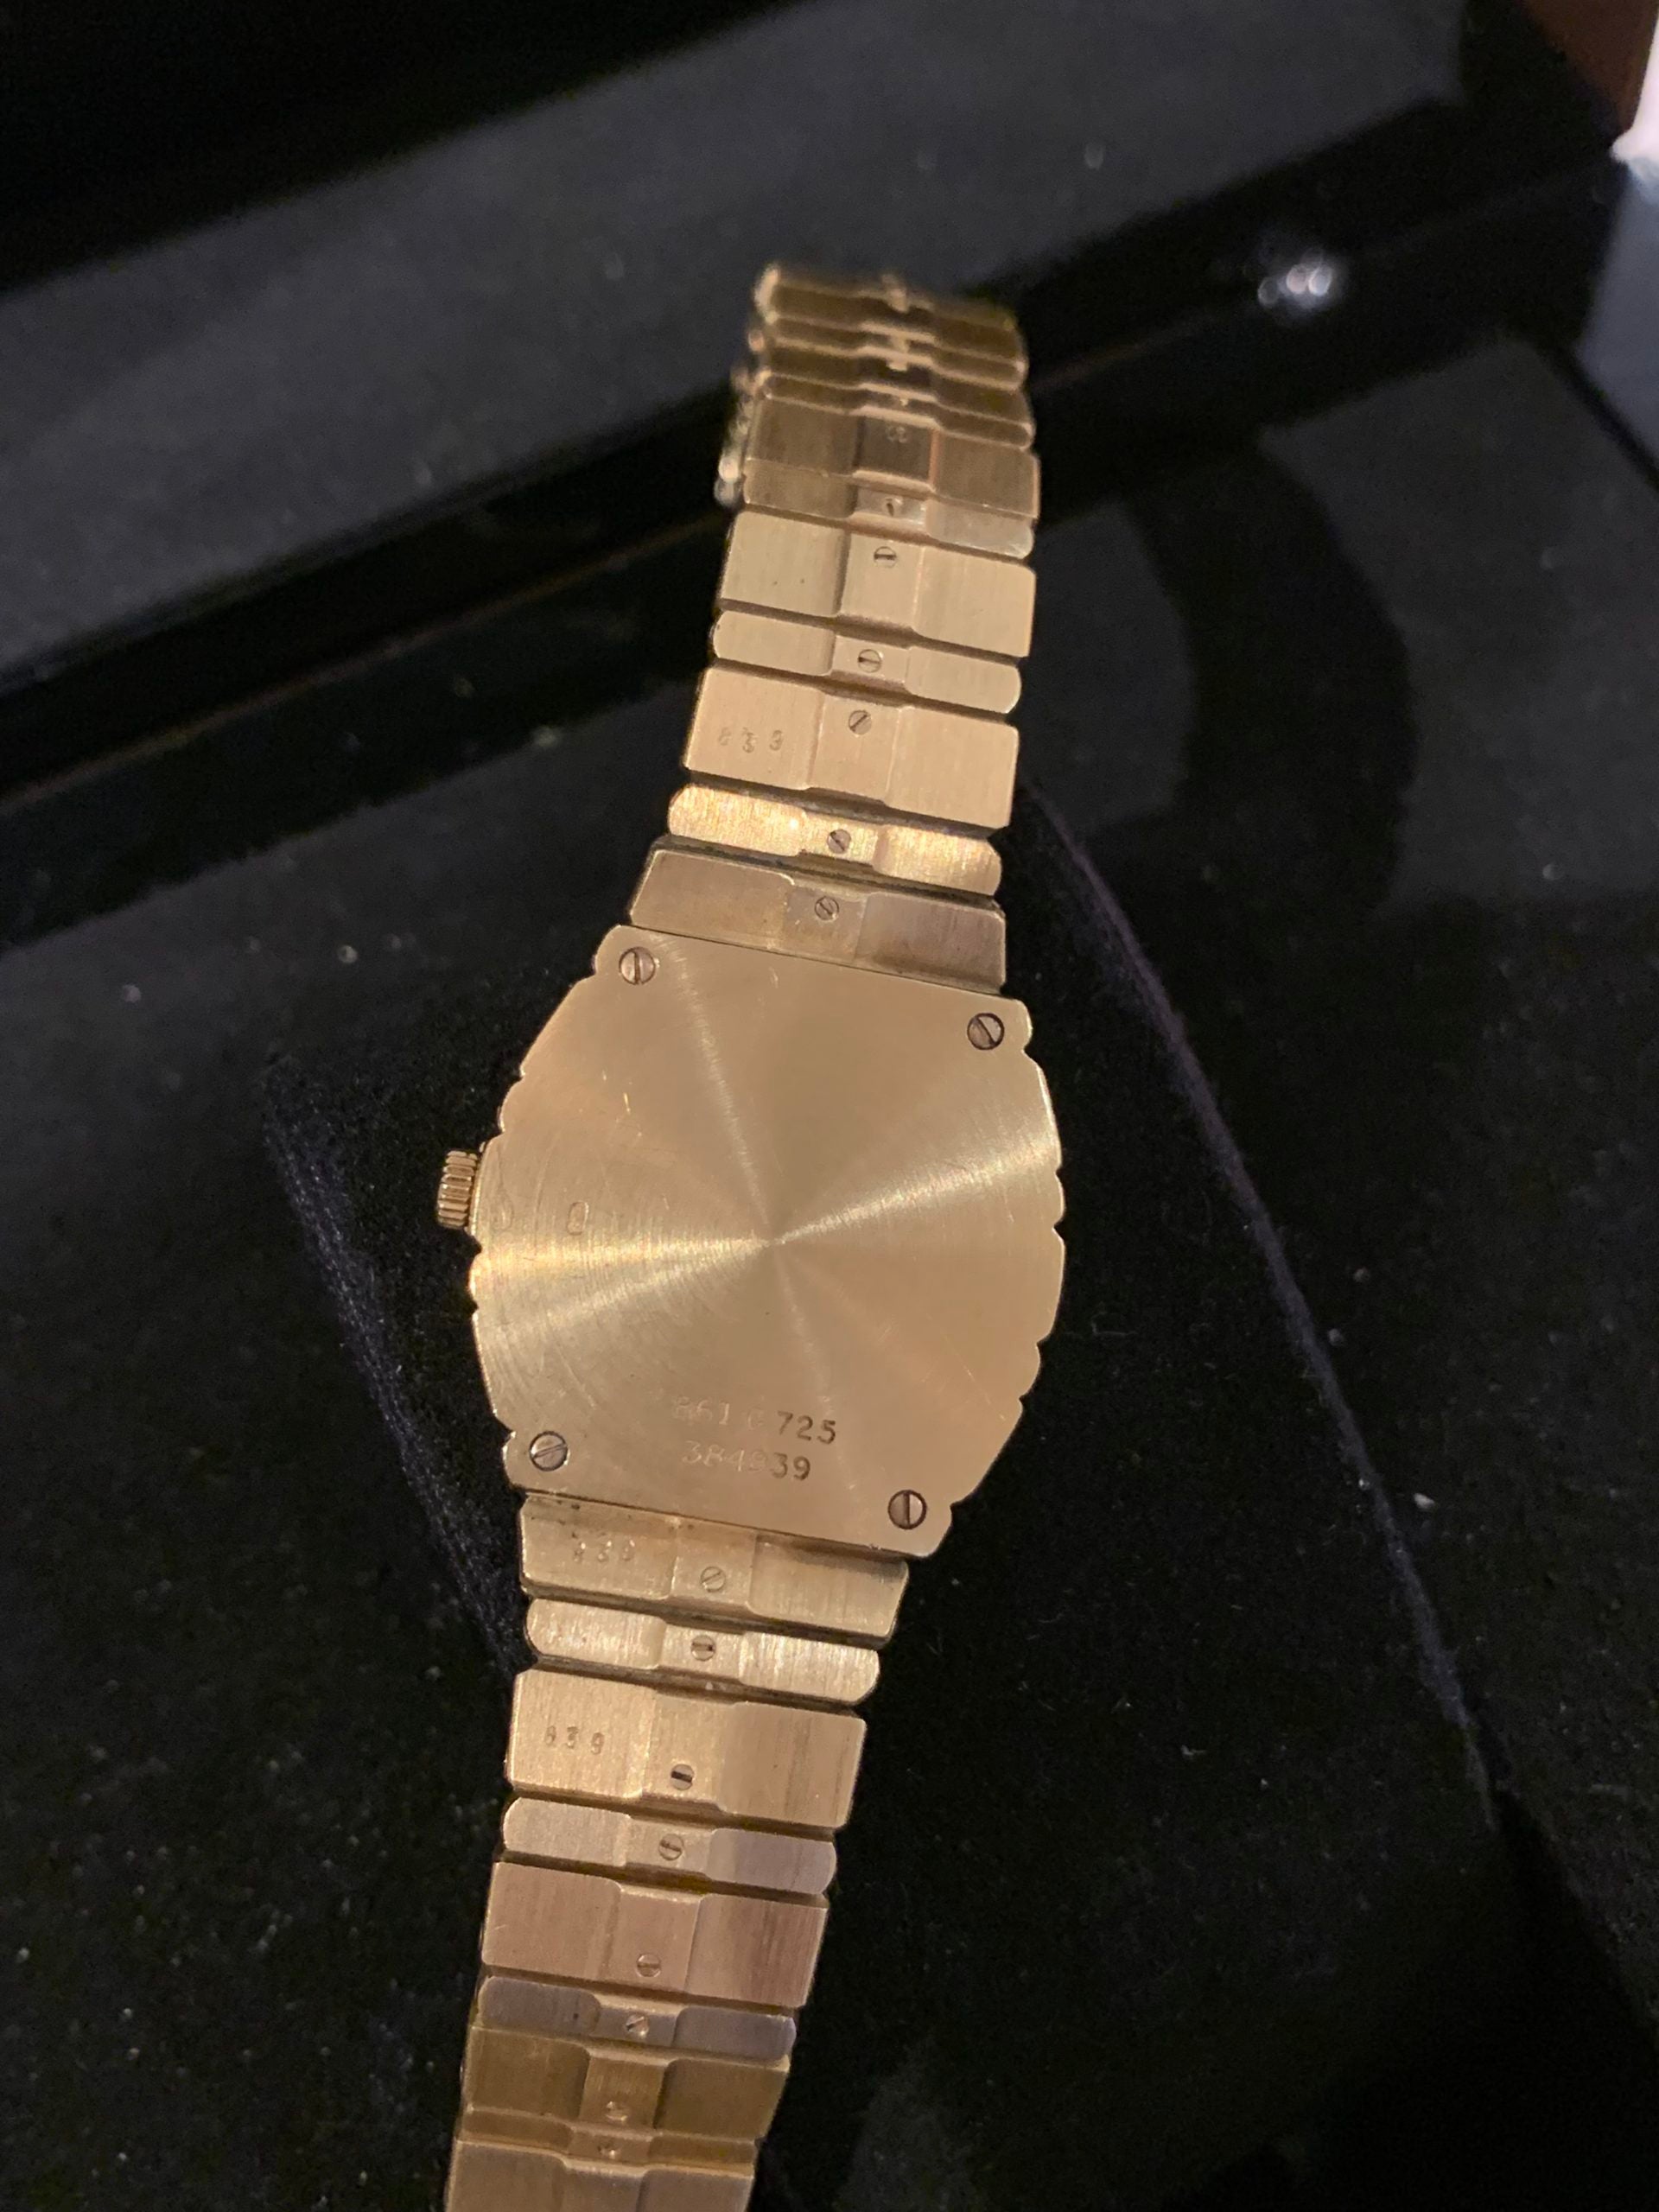 Piaget “Polo” Full Diamonds 18 Carats Yellow Gold Watch